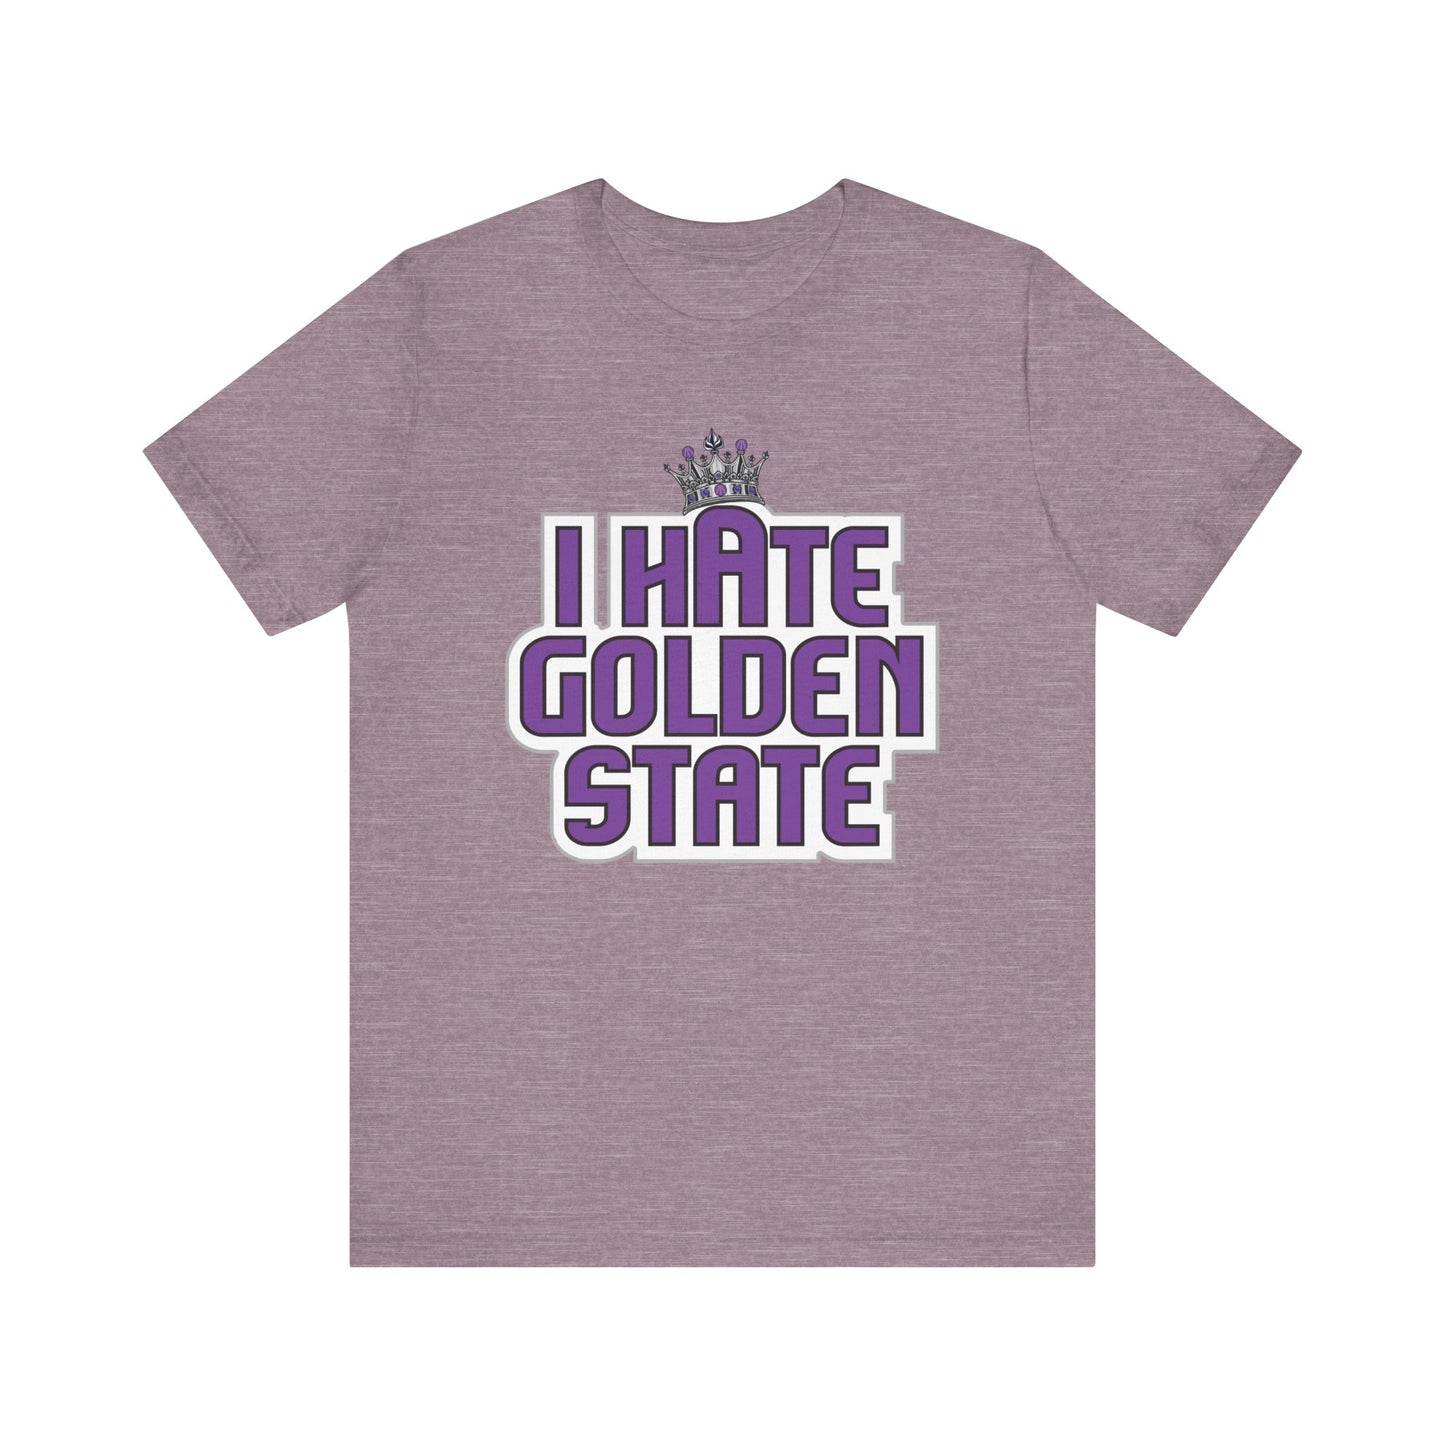 I Hate Golden State (for Sacramento fans) - Unisex Jersey Short Sleeve Tee